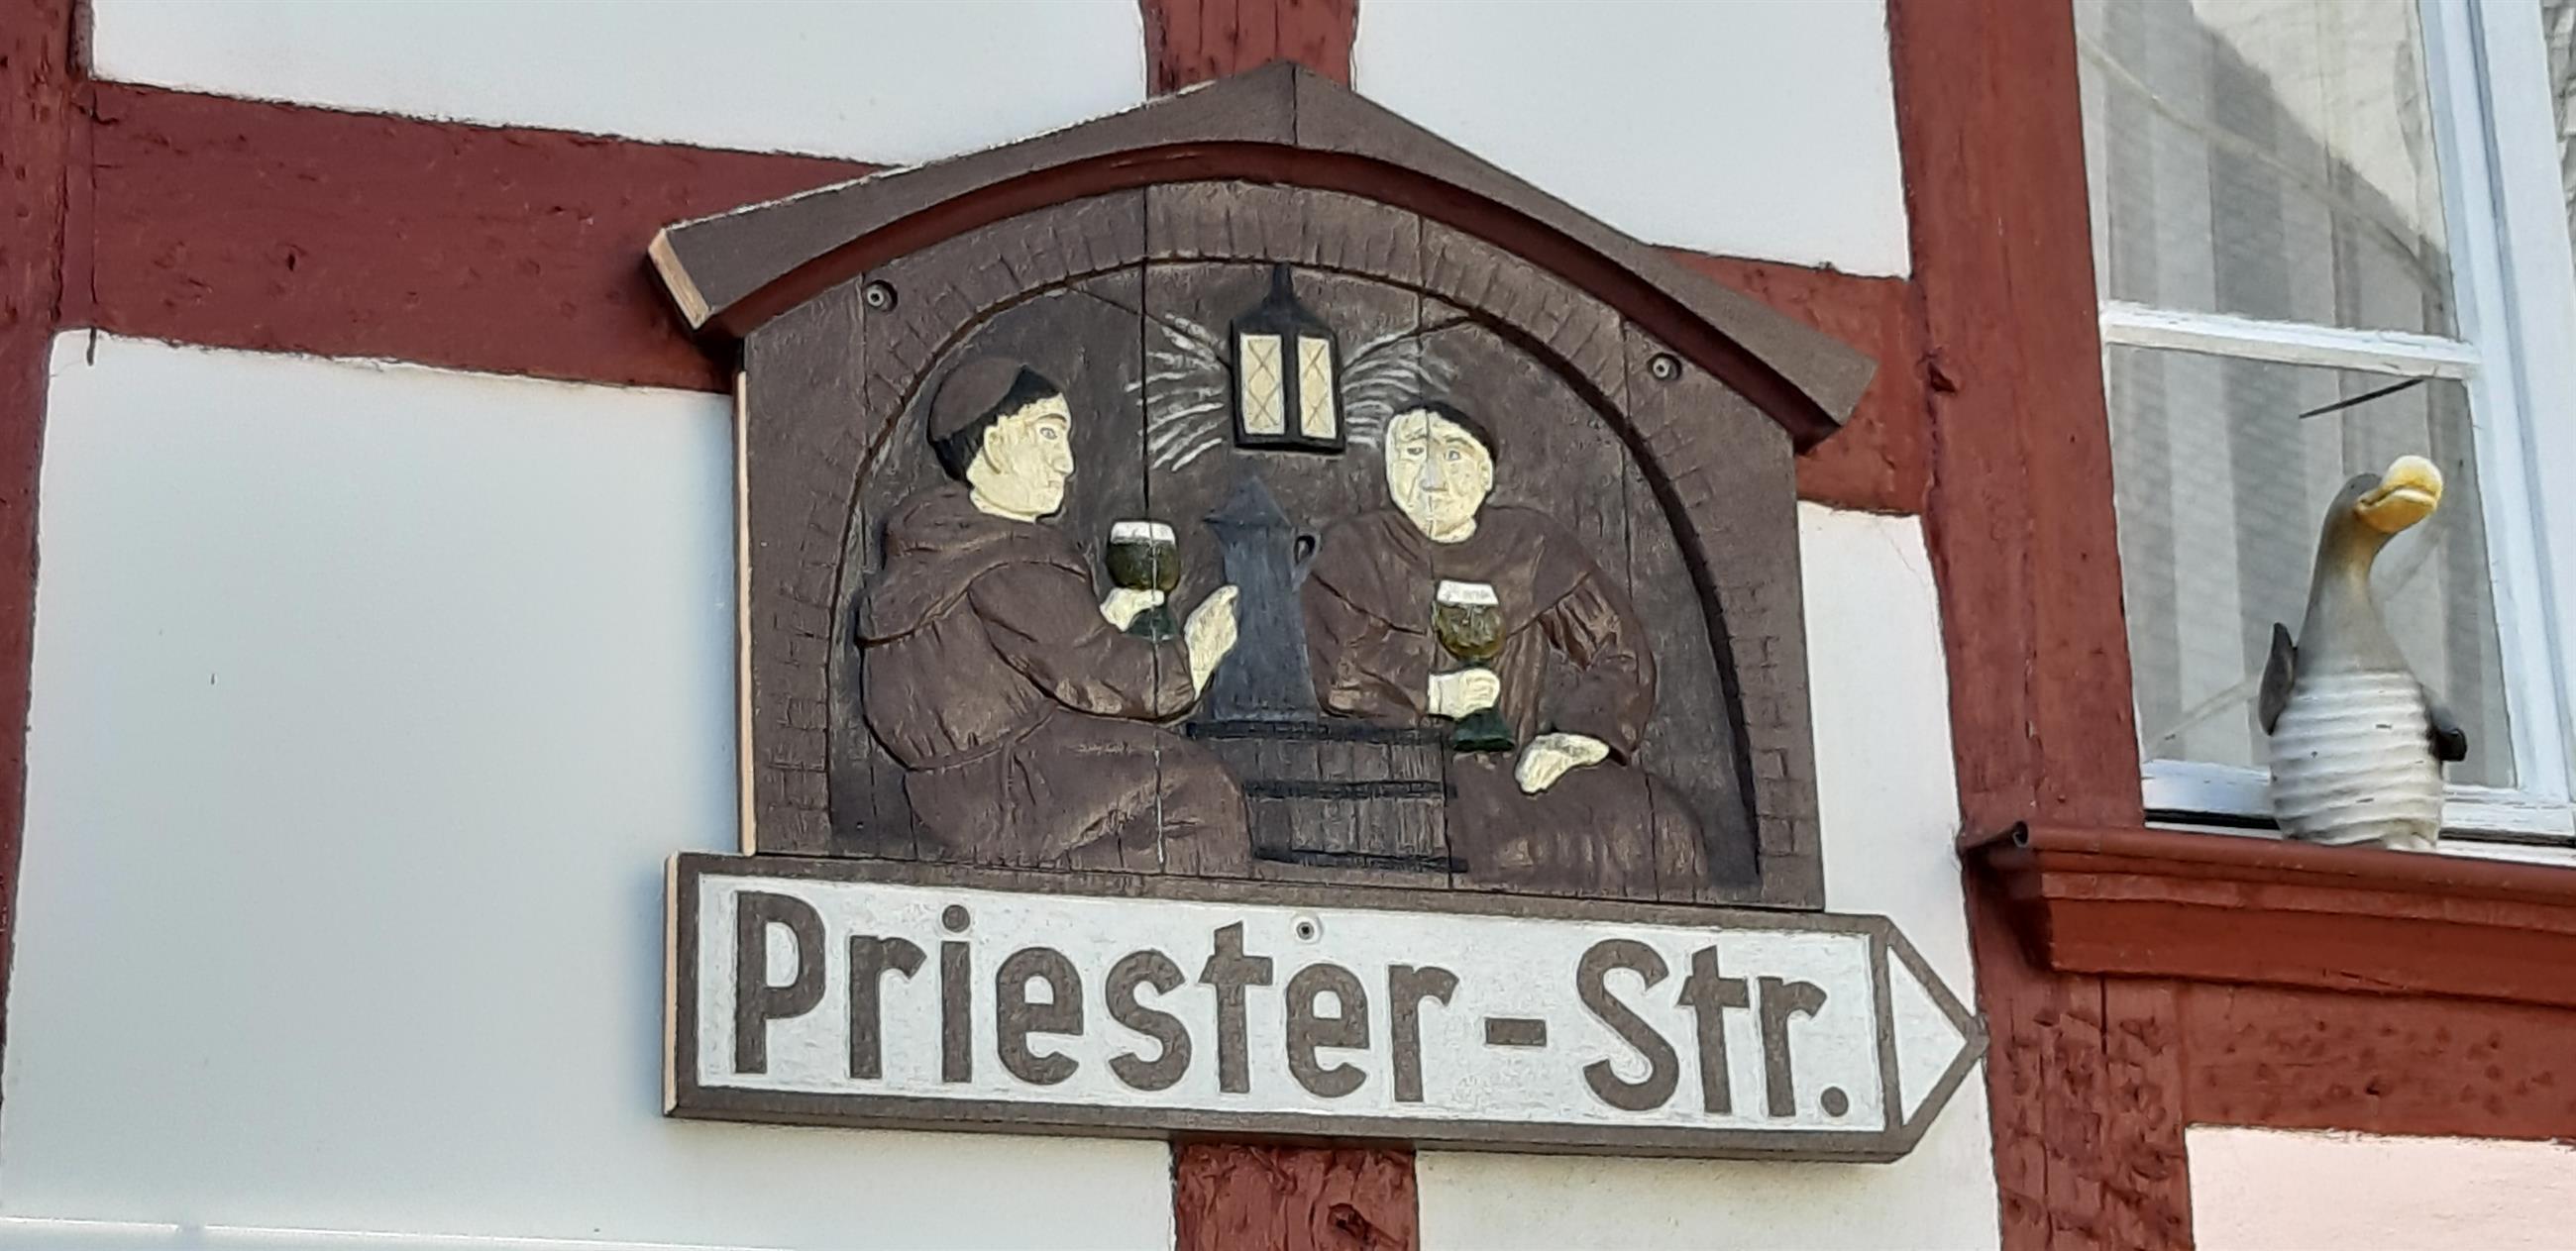 Straßenschild "Priesterstr."